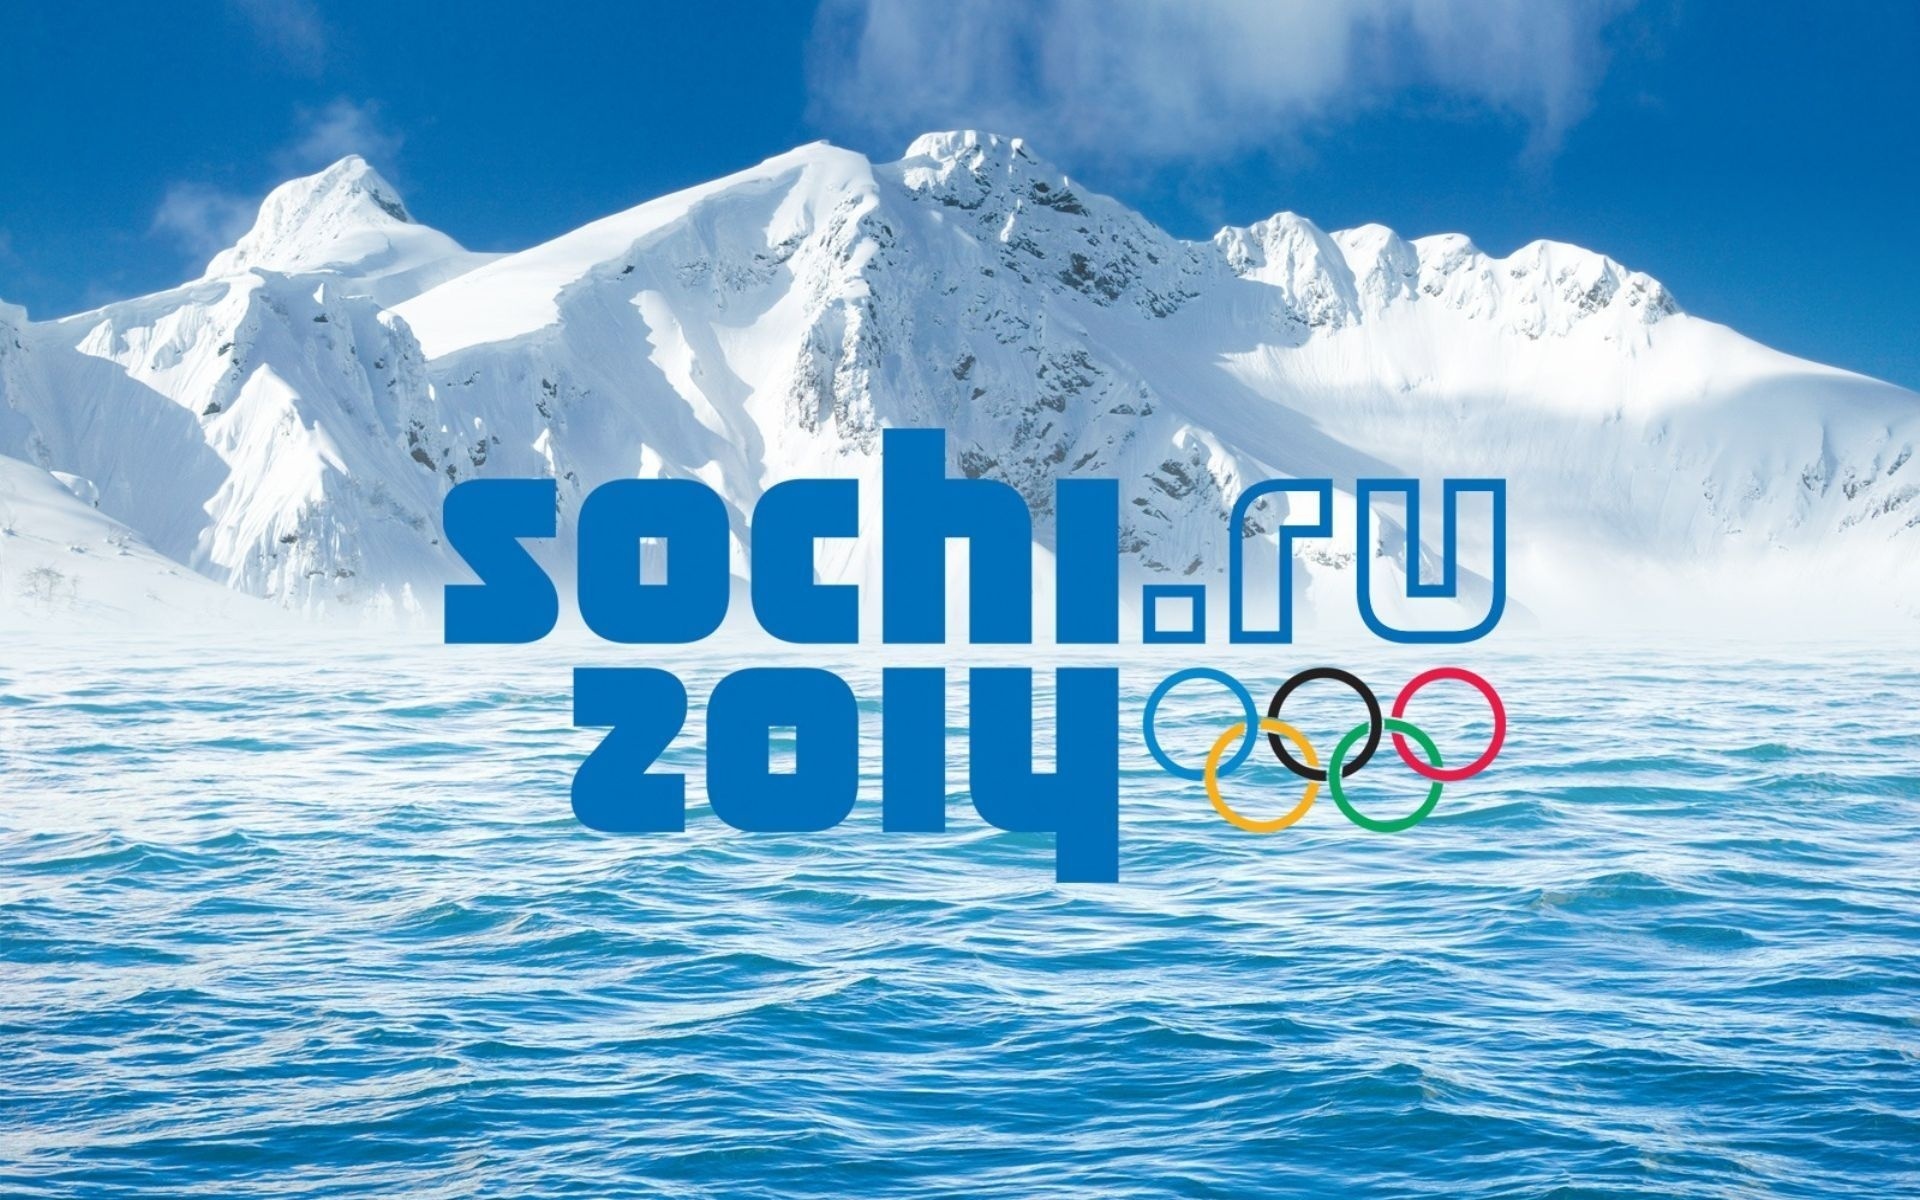 High Resolution Wallpaper | Winter Olimpic Games Sochi 2014 1920x1200 px